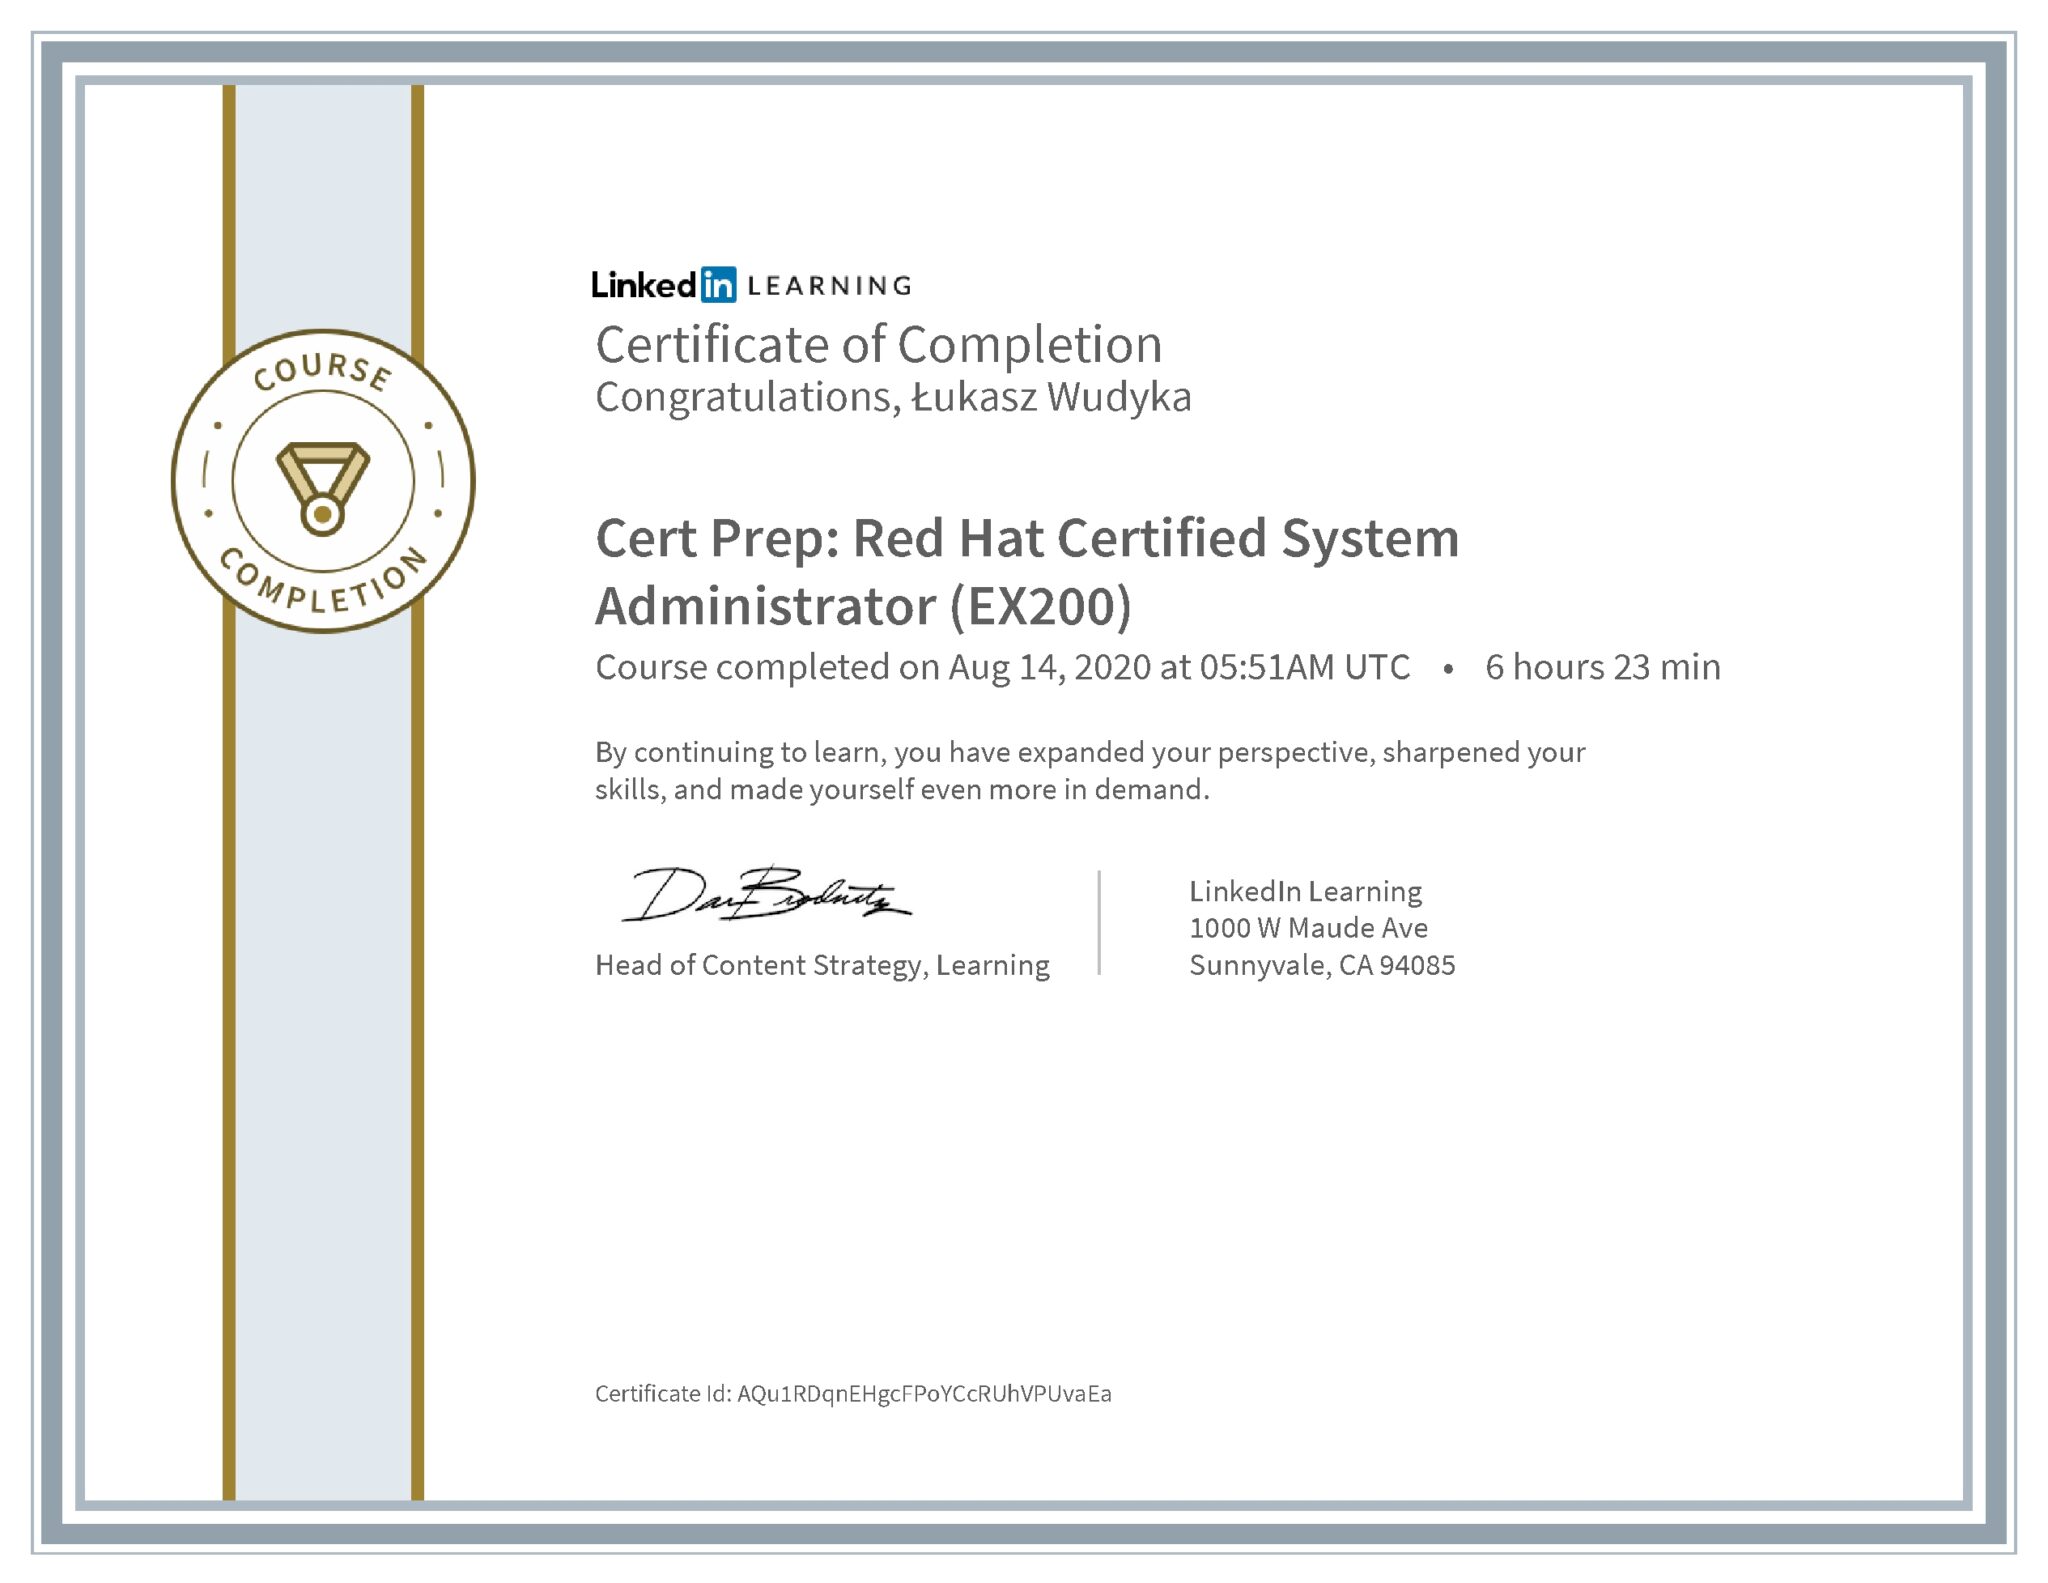 Łukasz Wudyka certyfikat LinkedIn Cert Prep: Red Hat Certified System Administrator (EX200)